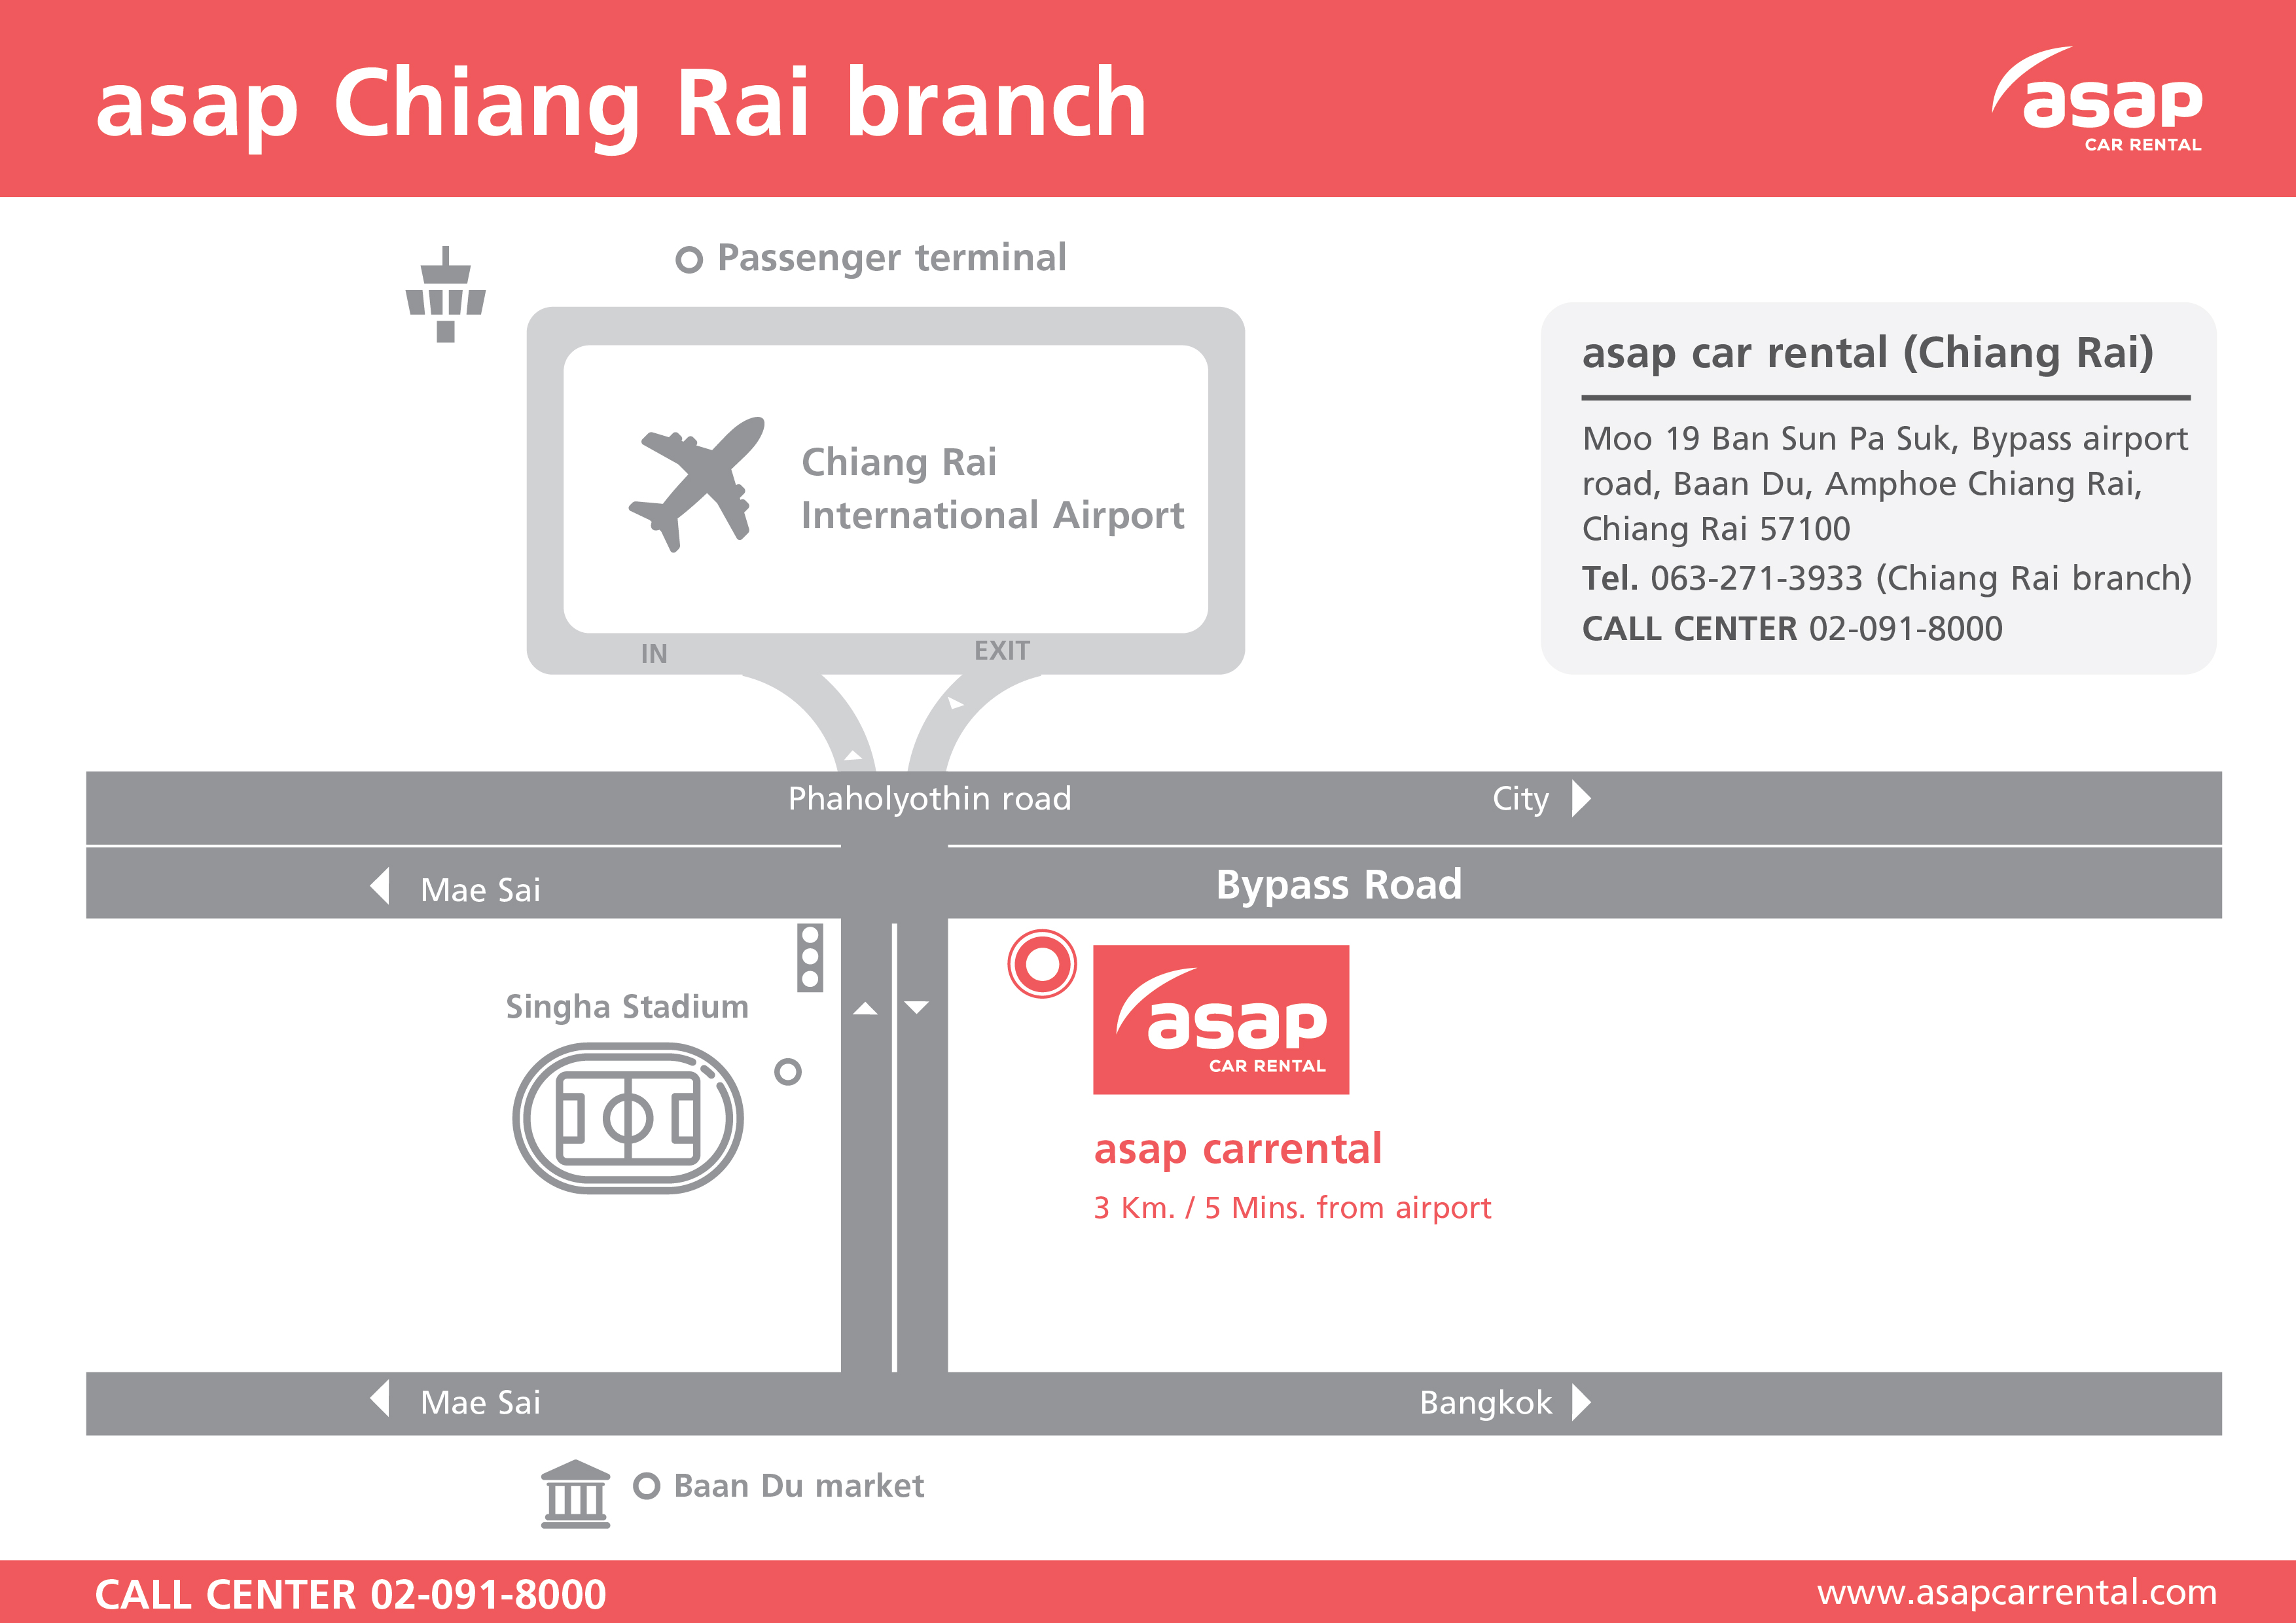 ASAP-Chiang Rai International Airport-211740-store